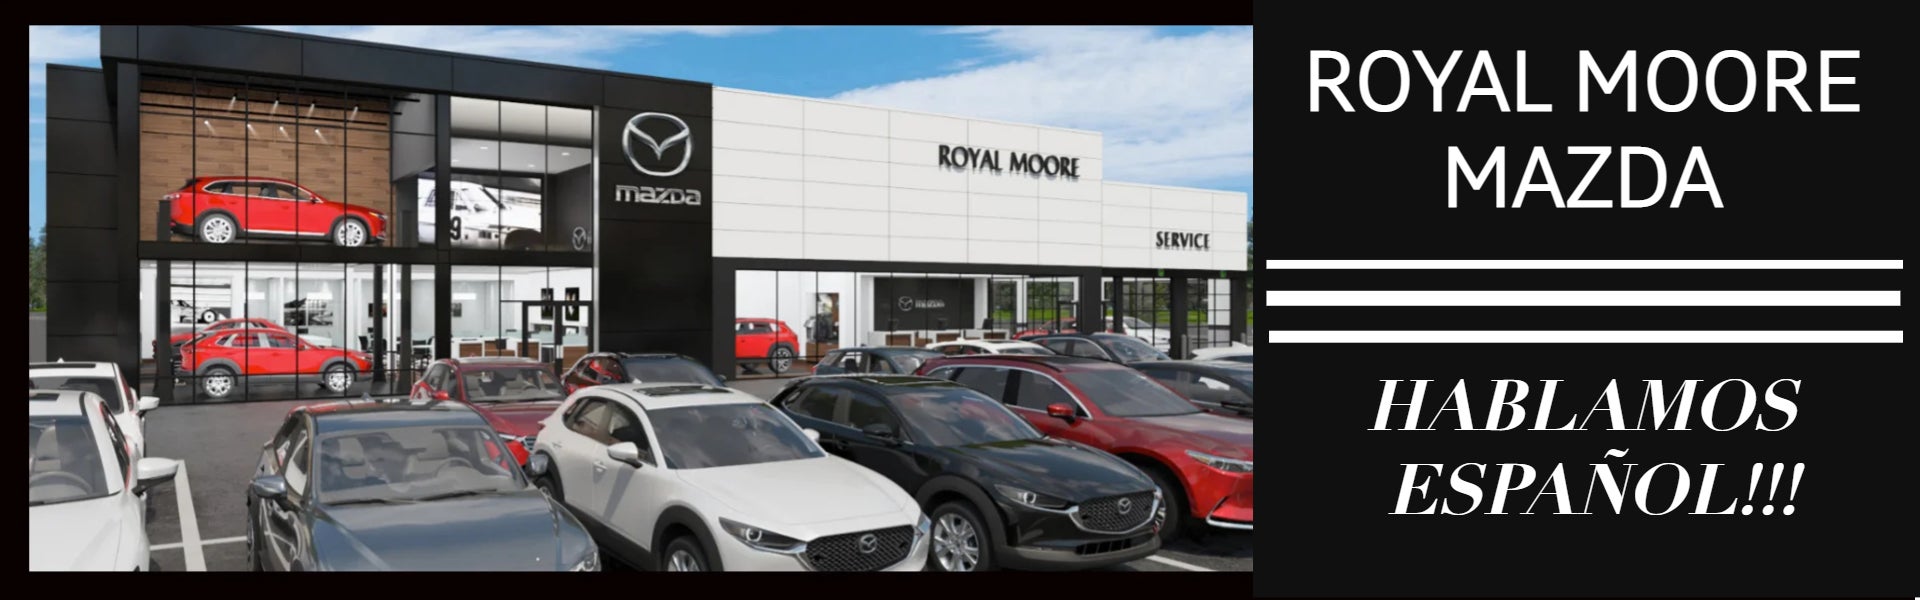 Royal Moore Mazda hablamos español